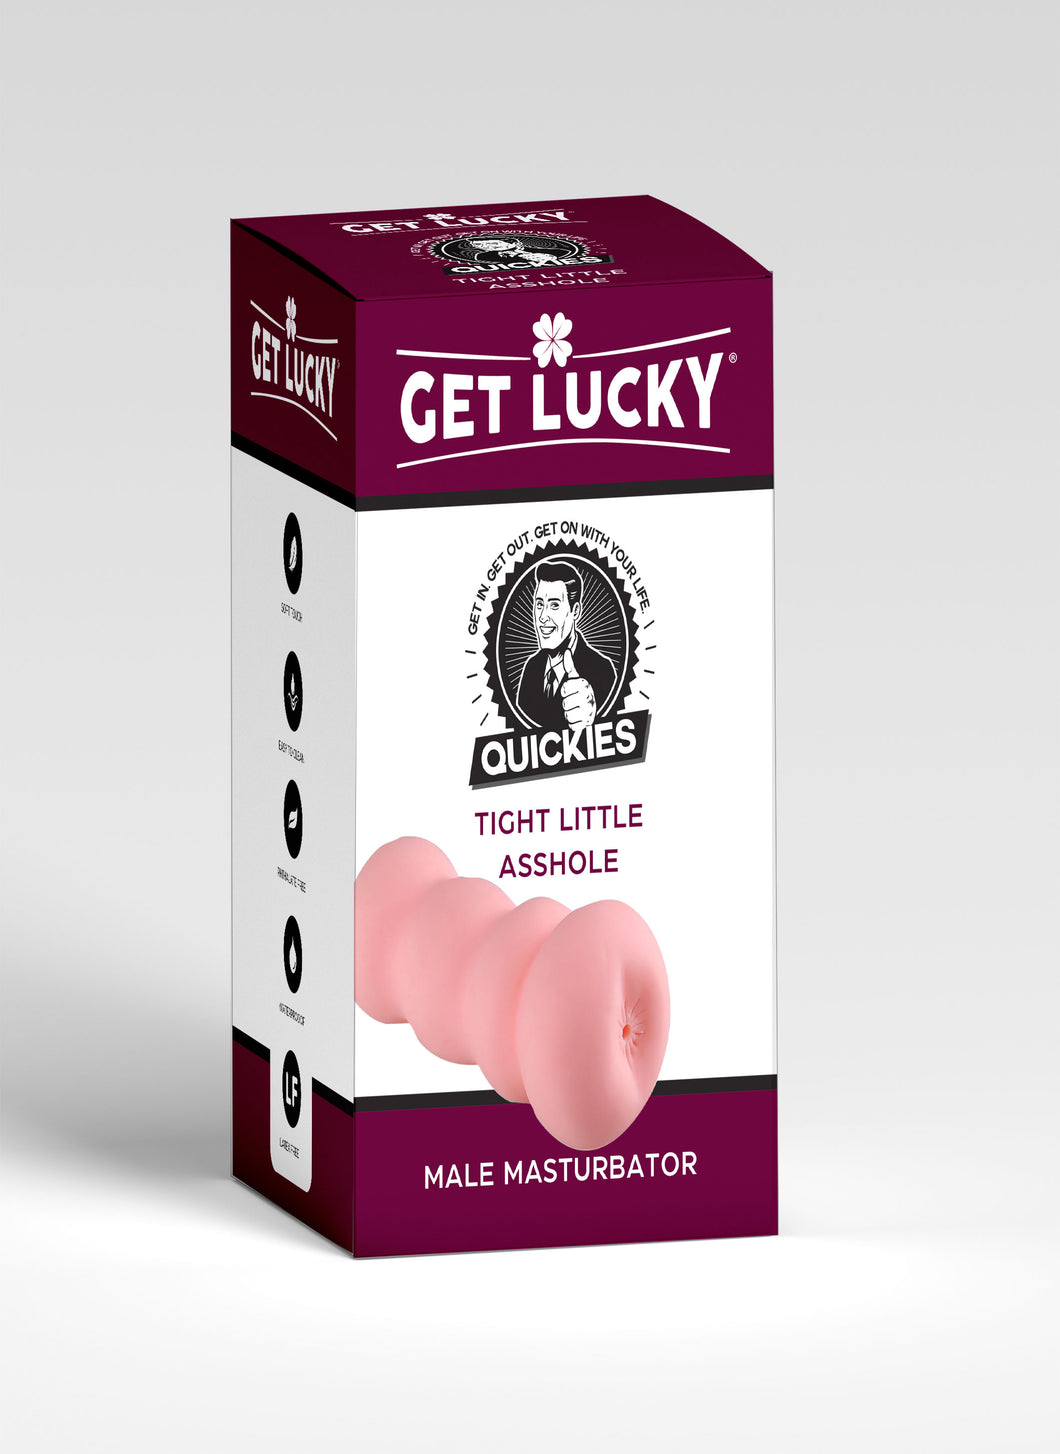 Get Lucky Quickies Tight Little Asshole Male Masturbator